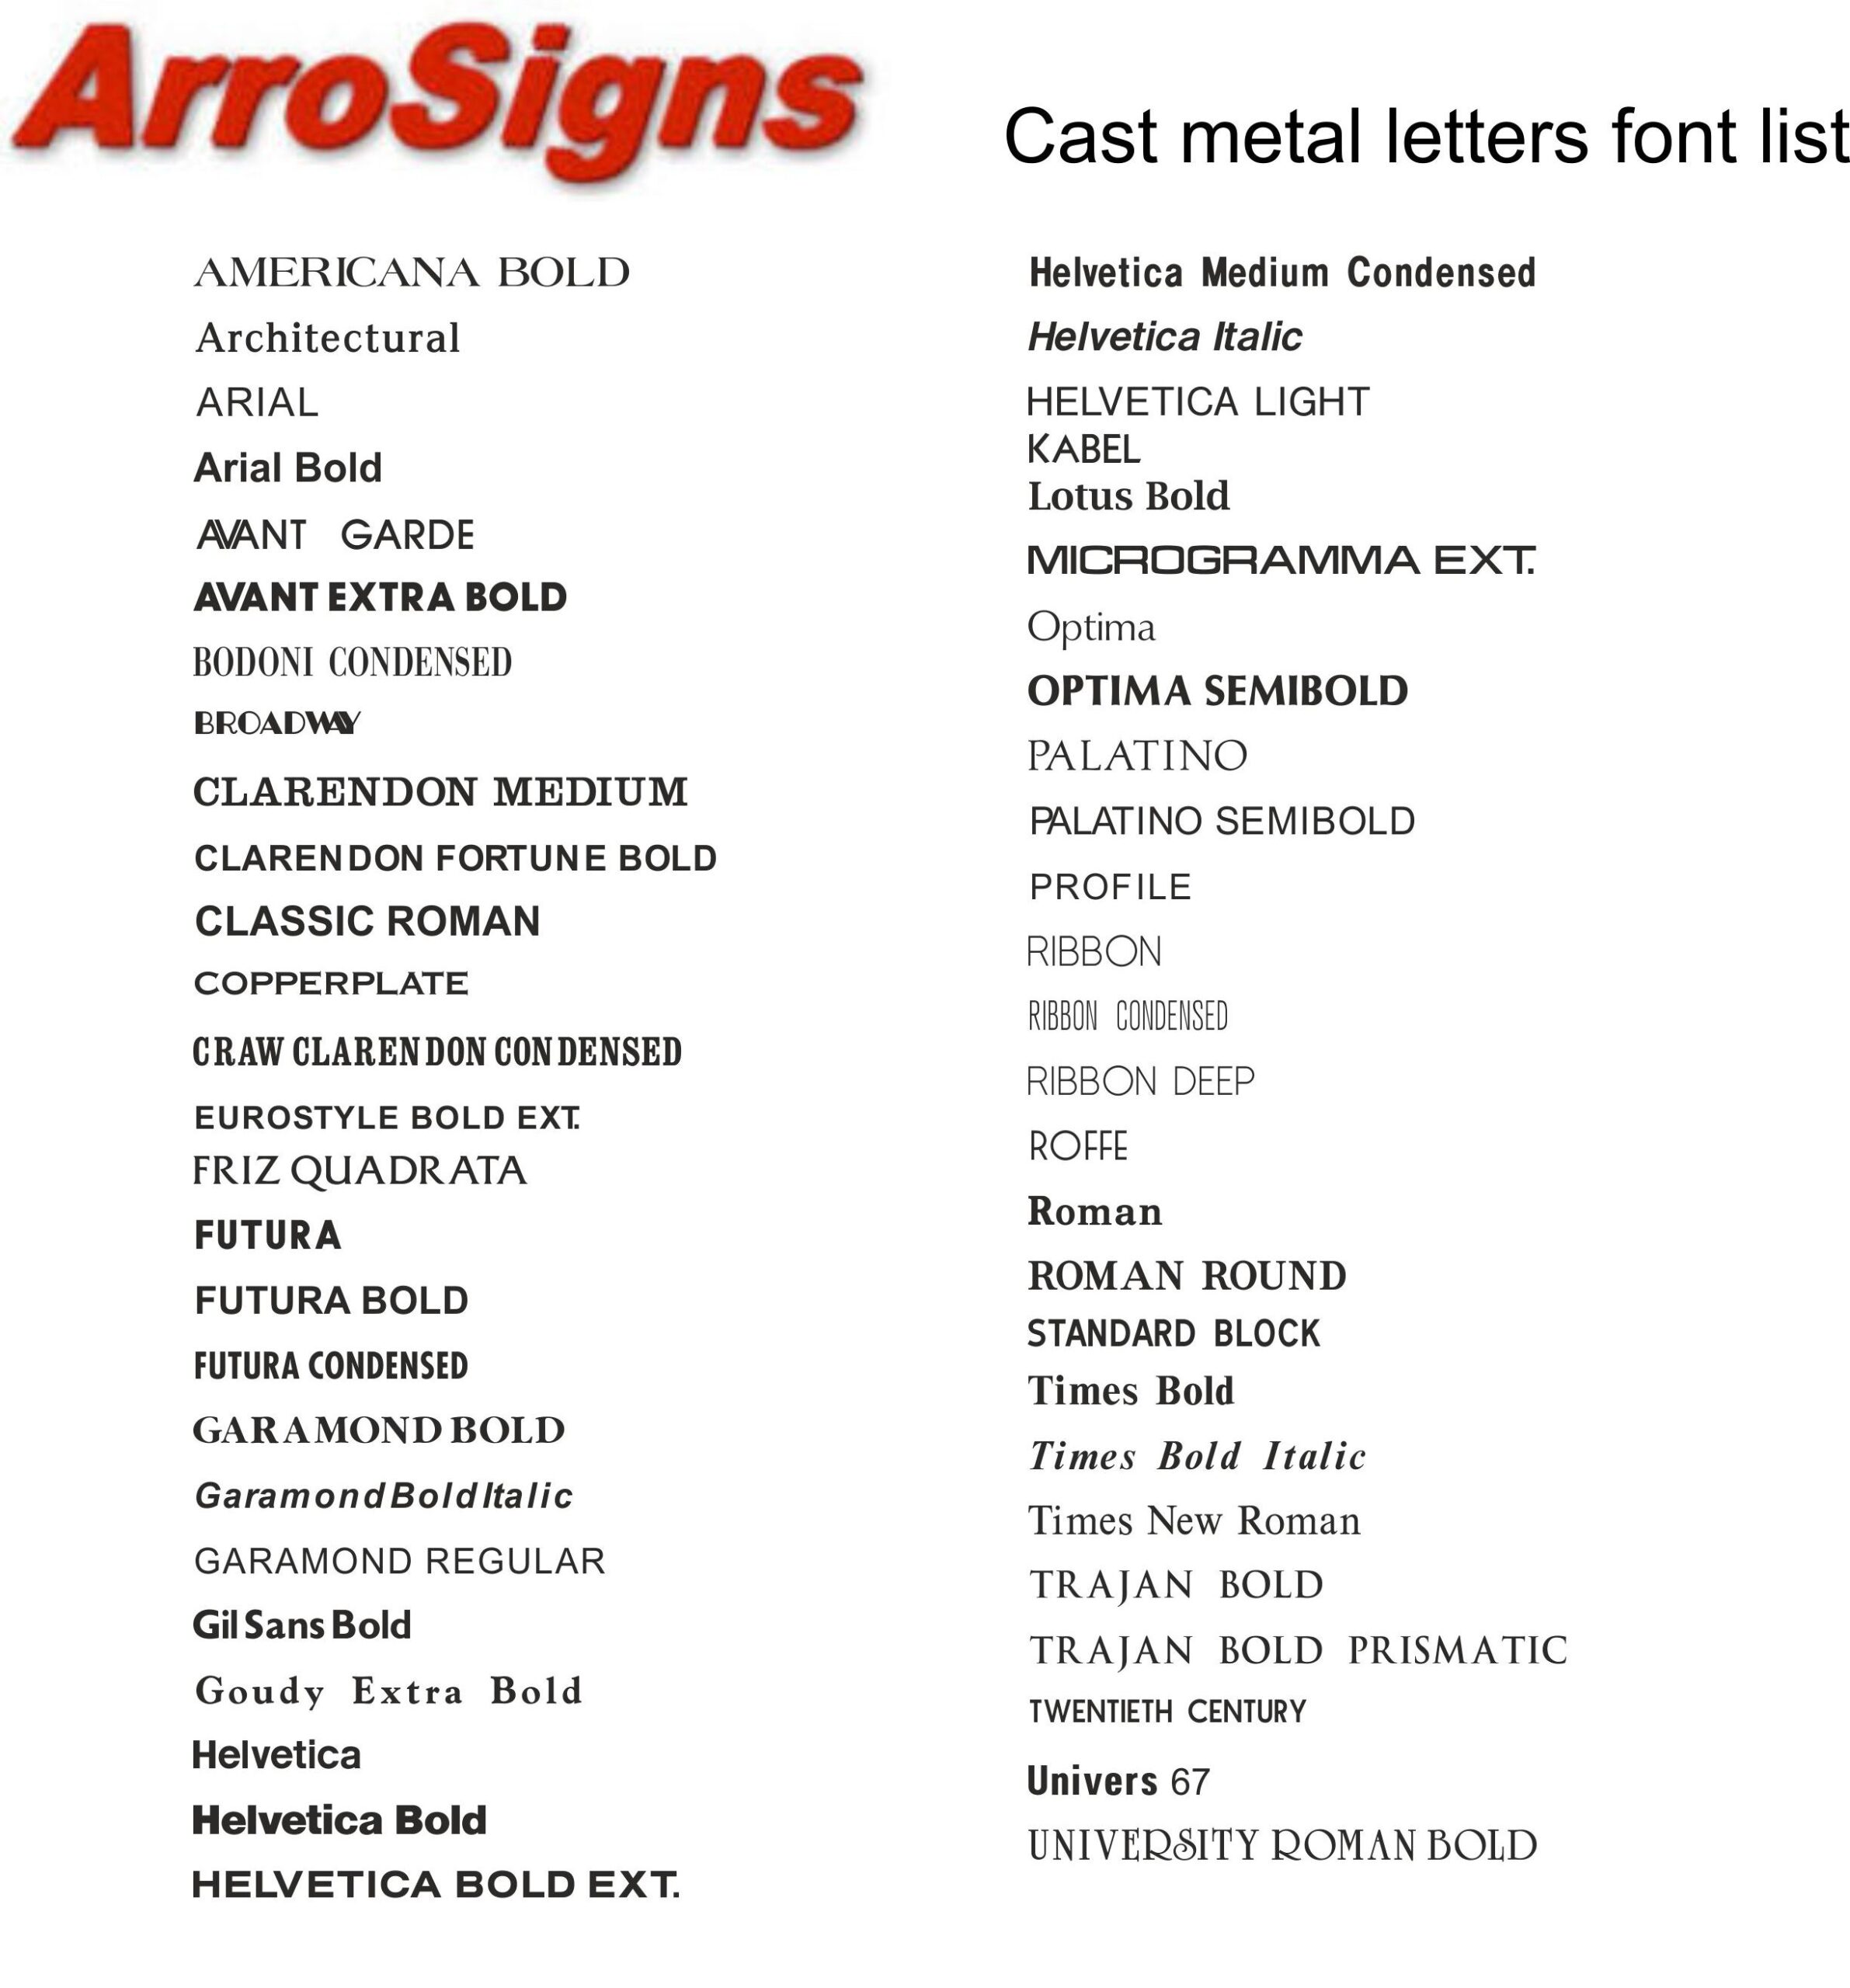 Cast Metal Letter Fonts